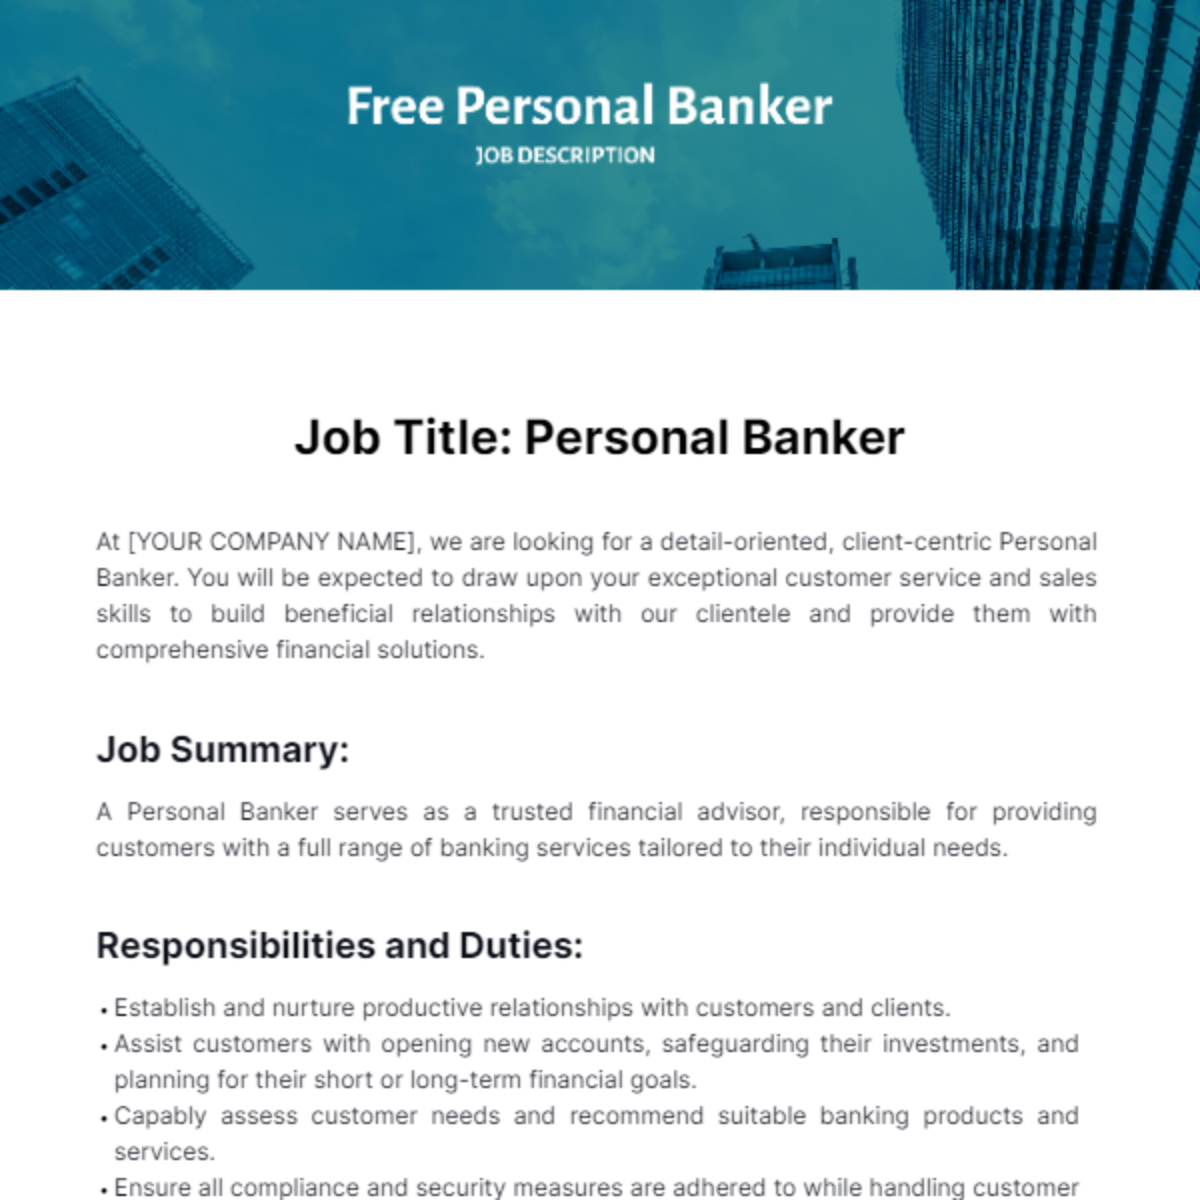 Free Personal Banker Job Description Template